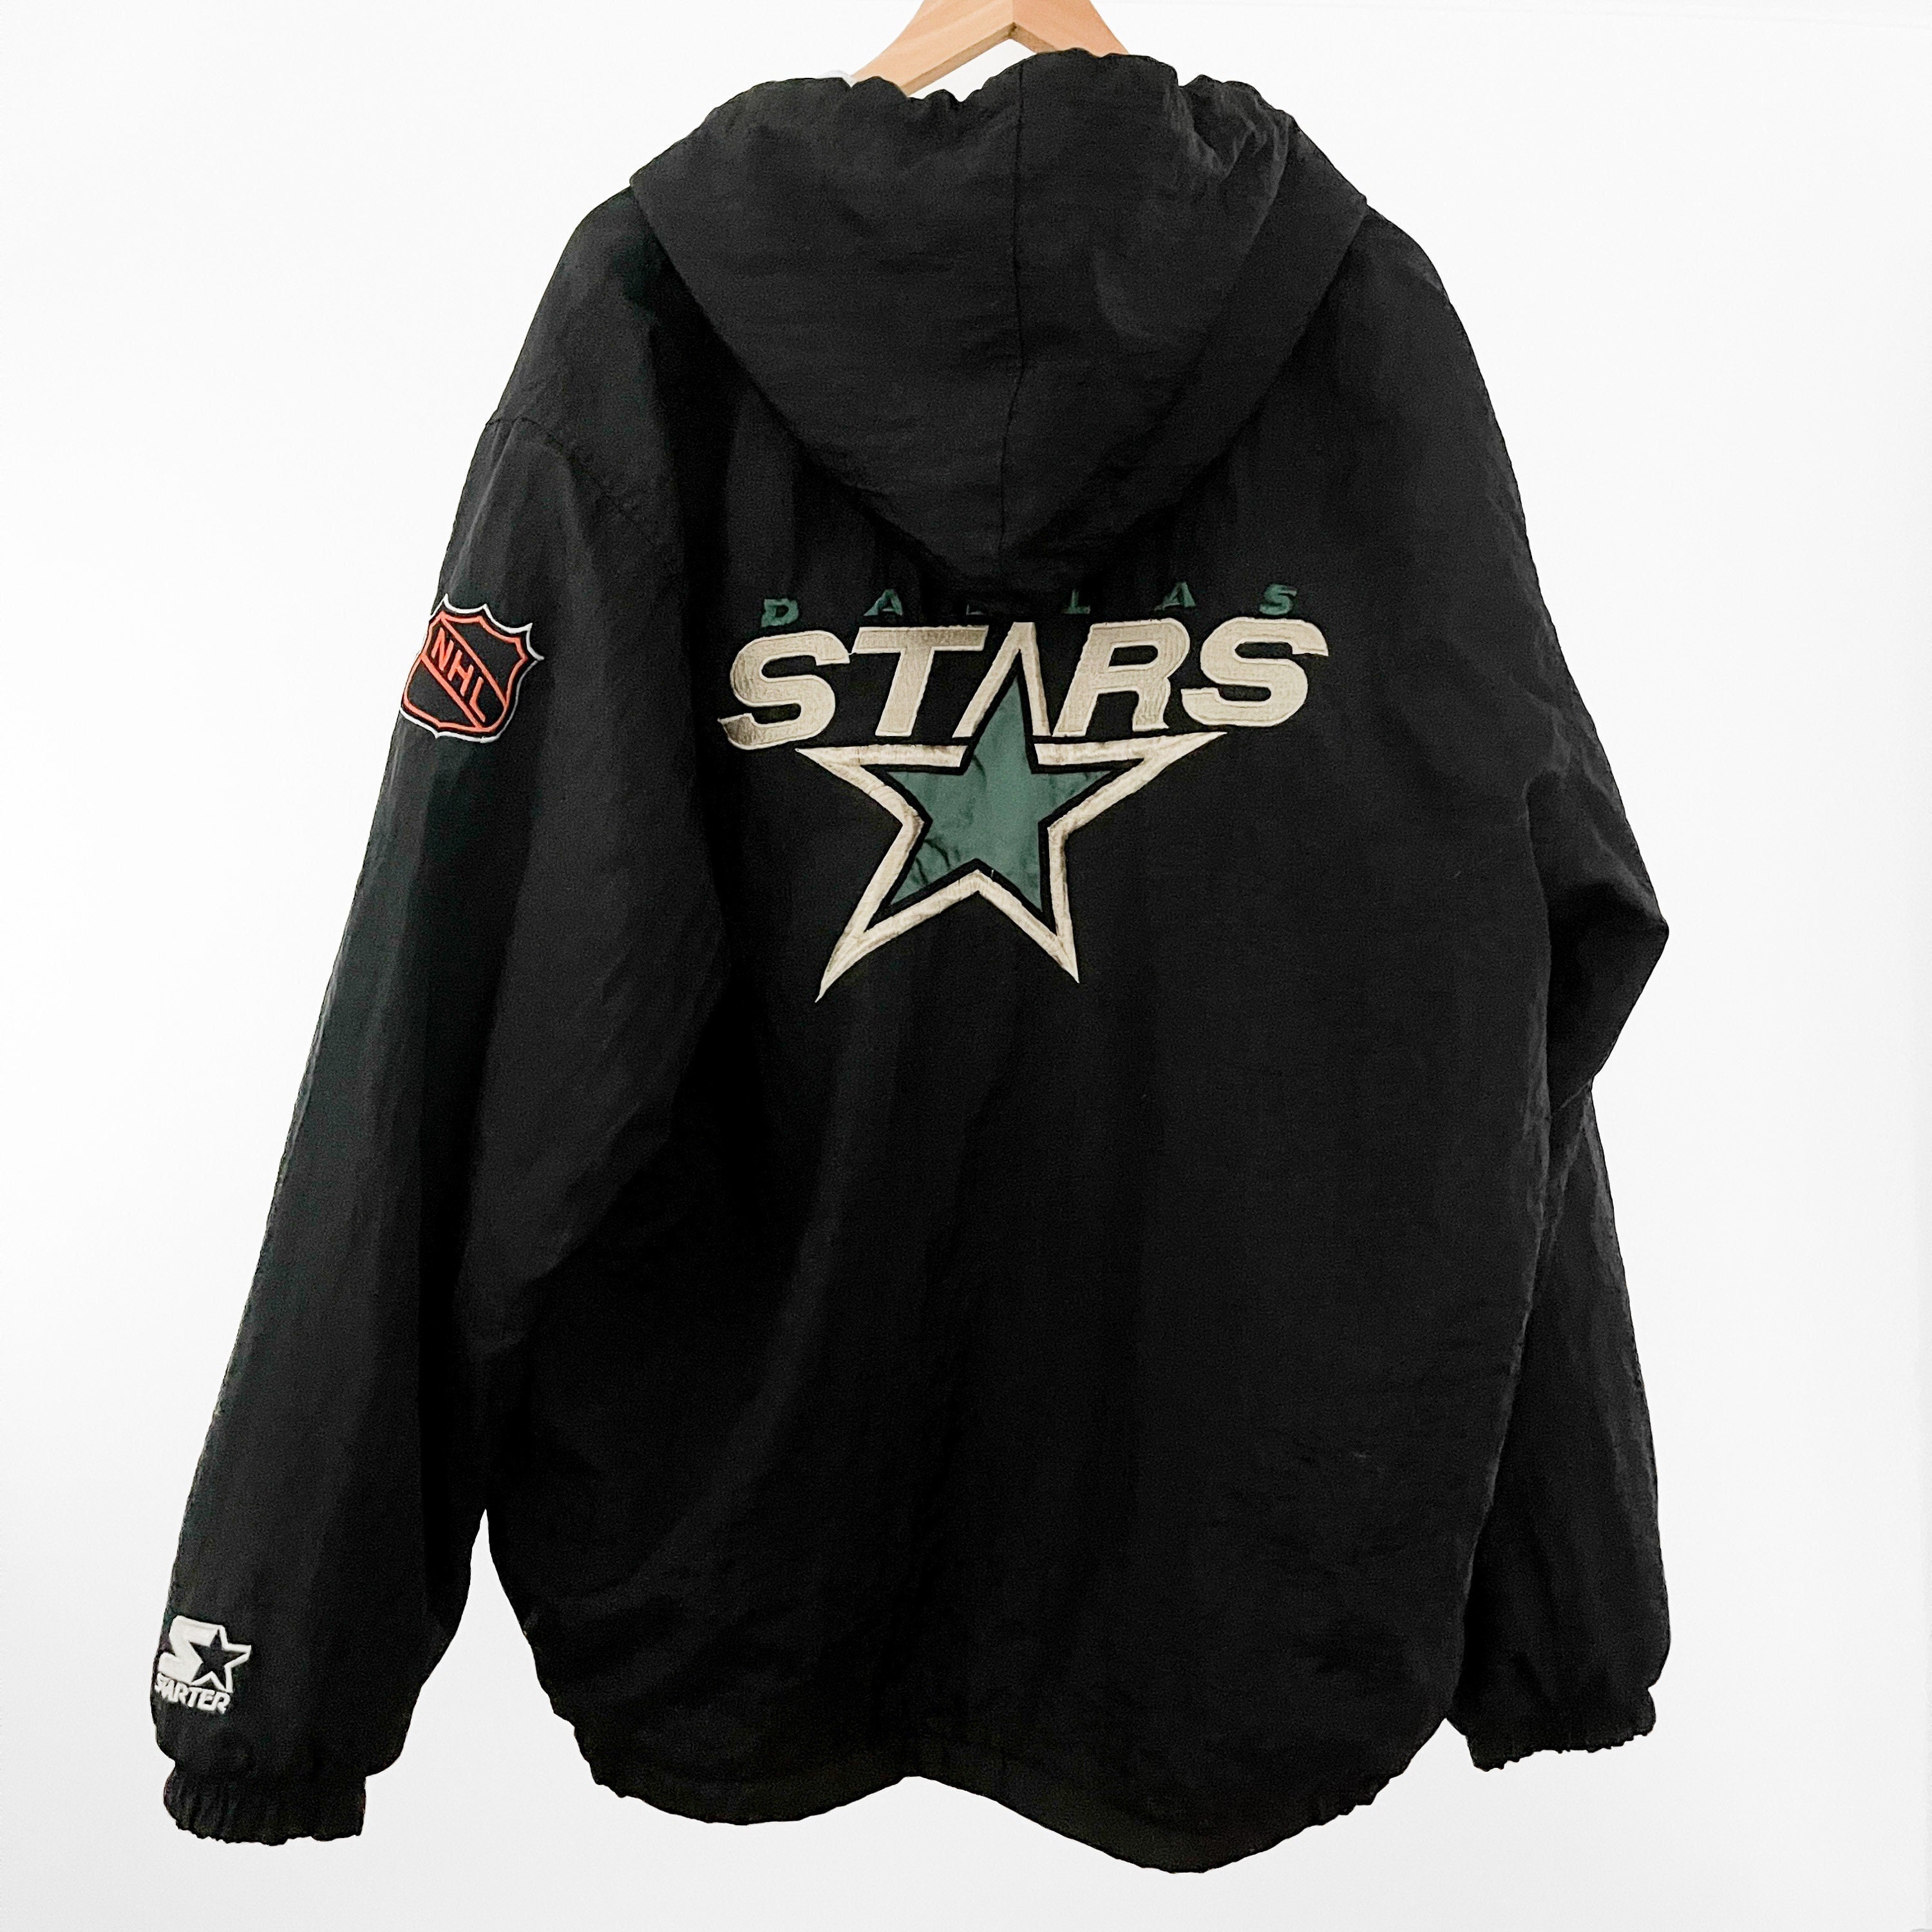 Jason Robertson 21 Dallas Stars hockey player poster gift shirt, hoodie,  sweater, long sleeve and tank top